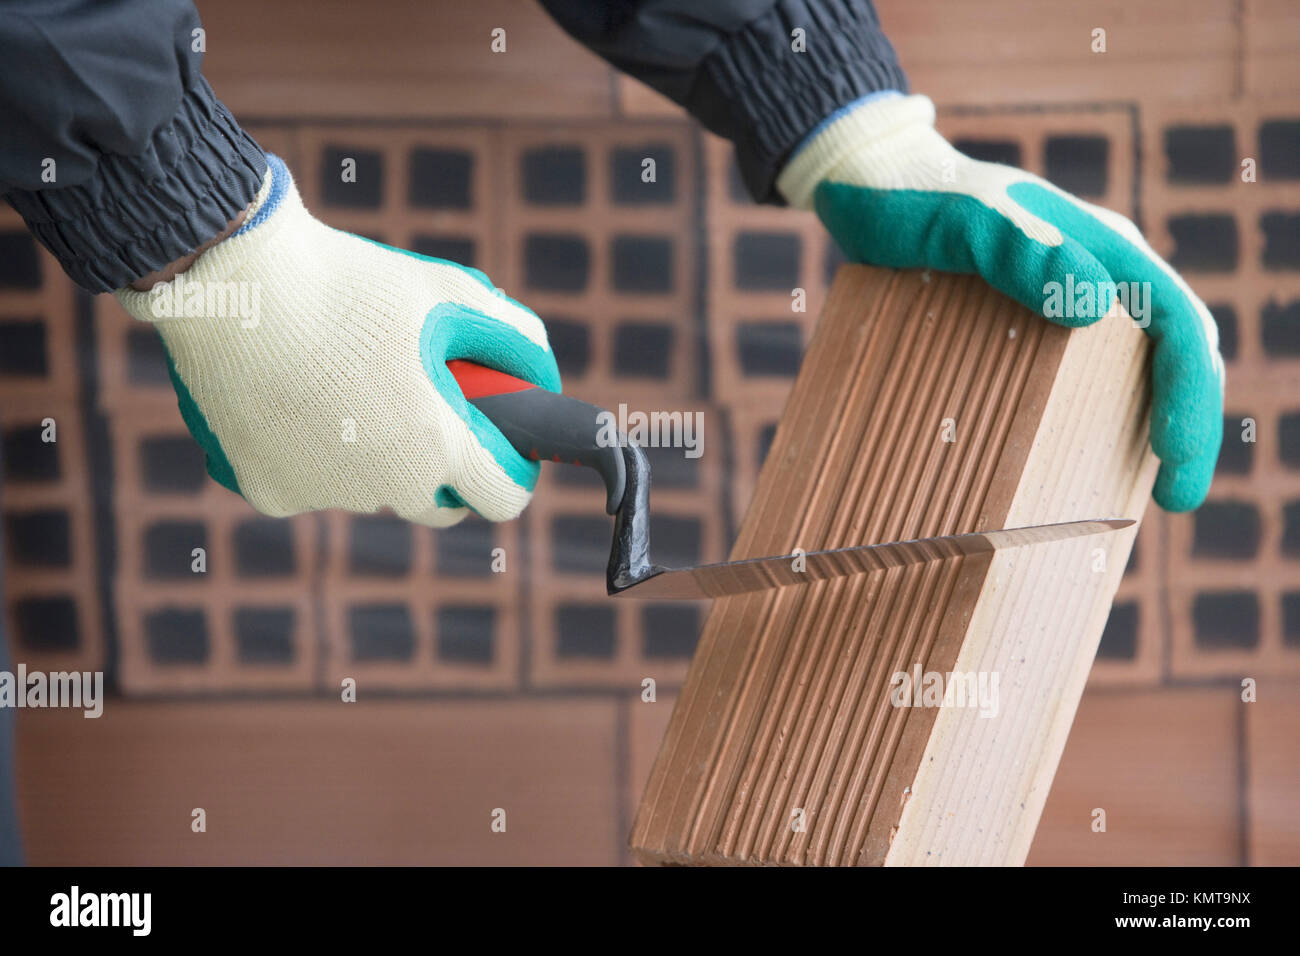 Cutting brick mason with trowel, housing construction Stock Photo